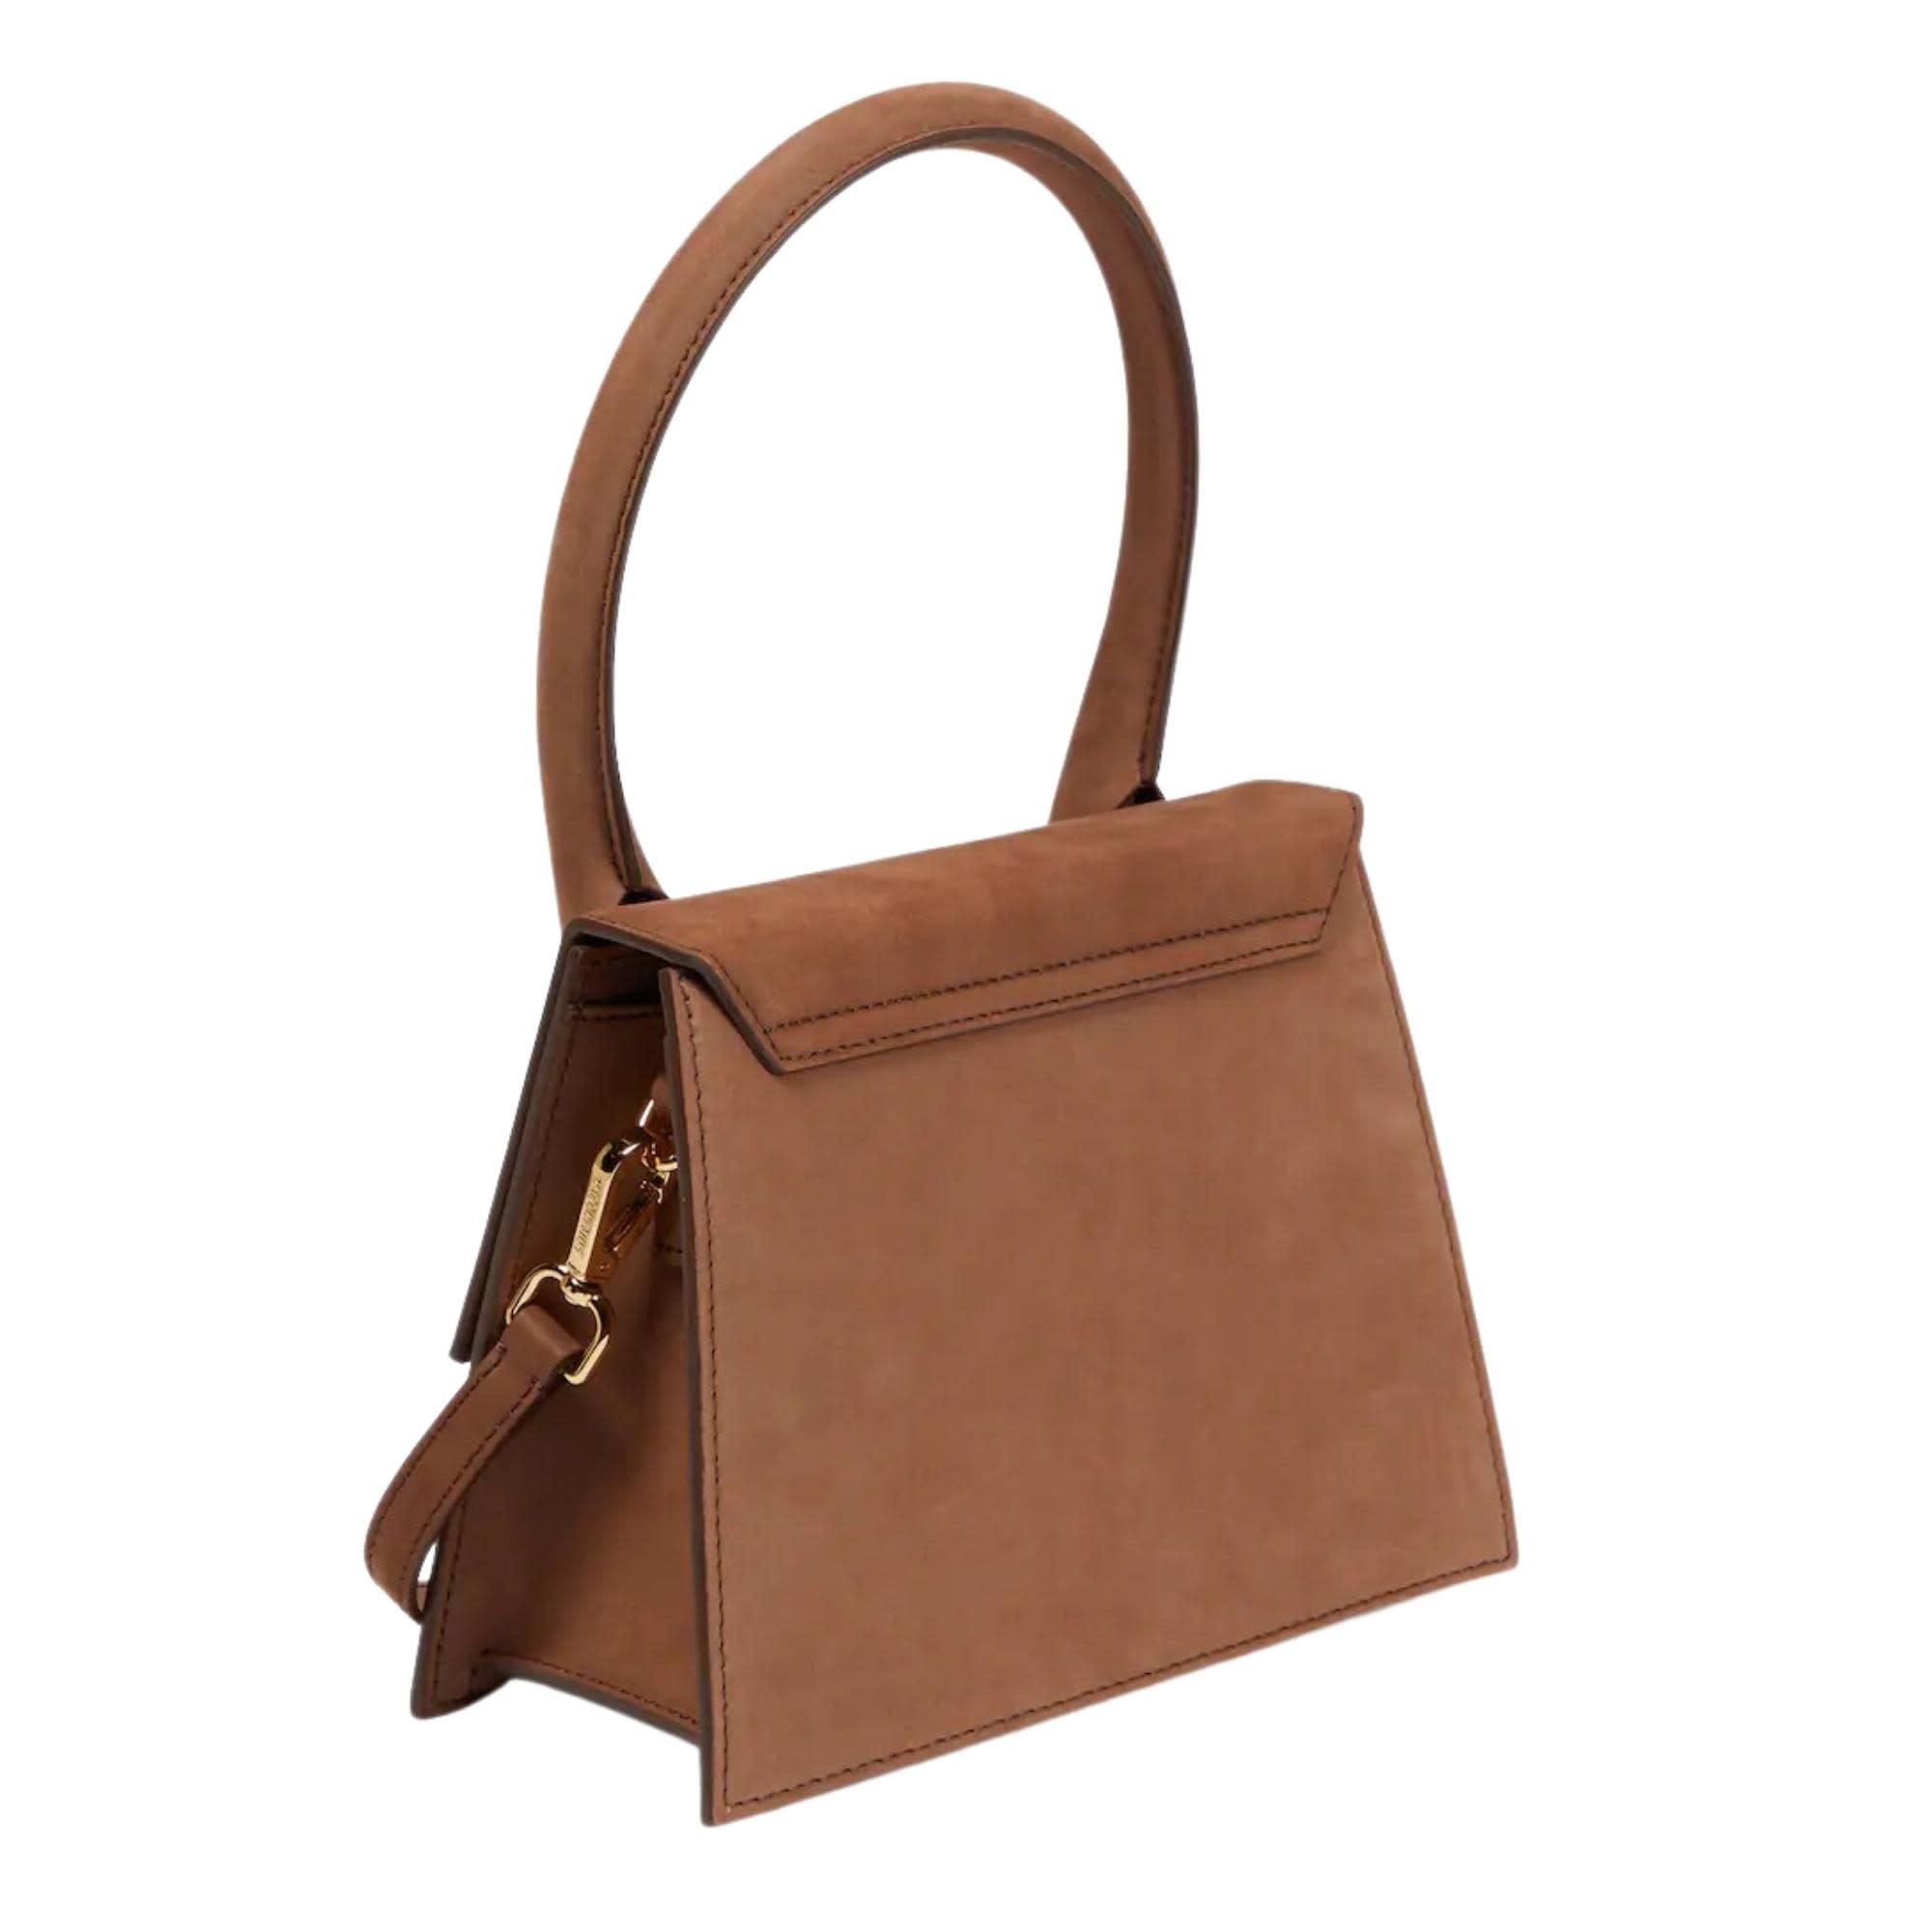 Le grand chiquito leather top handle bag - Jacquemus - Women | Luisaviaroma